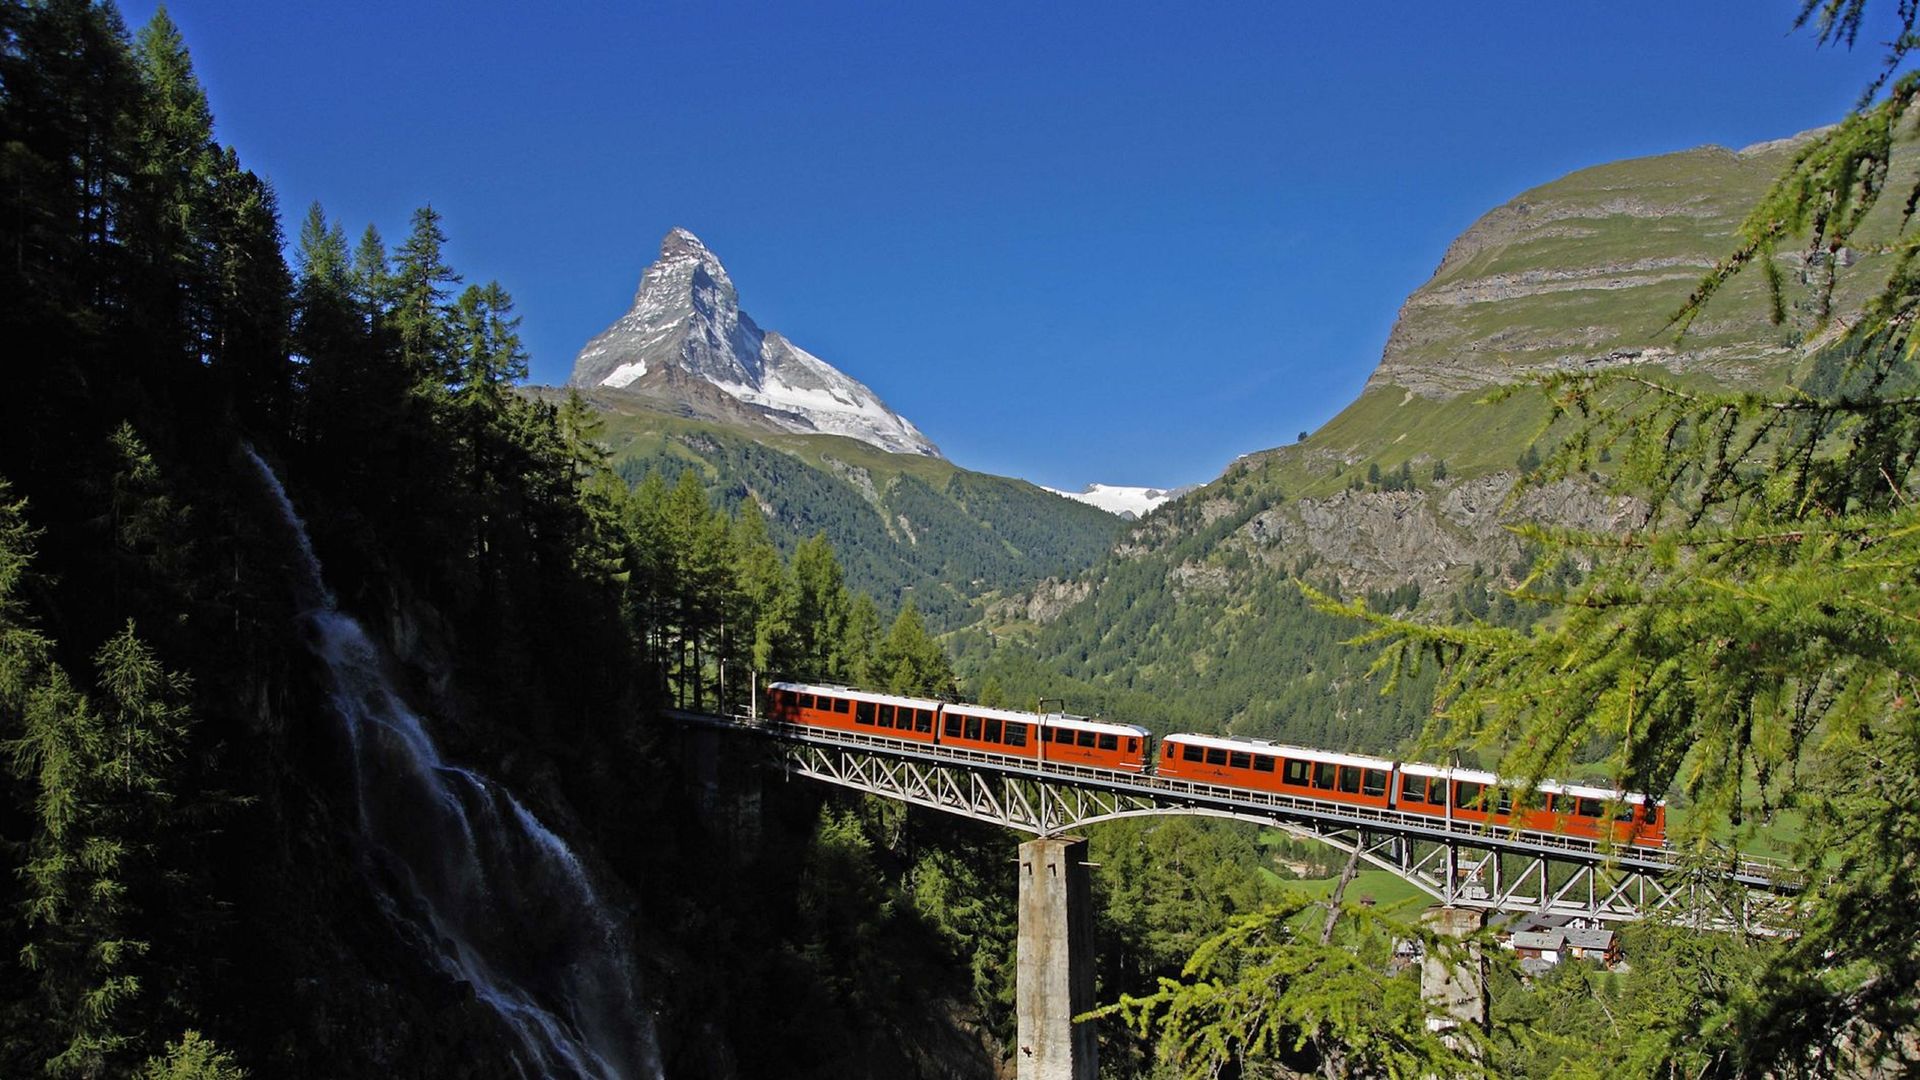 The Gornergrat Bahn crosses the Findelbach Bridge with a view of the Matterhorn in summer